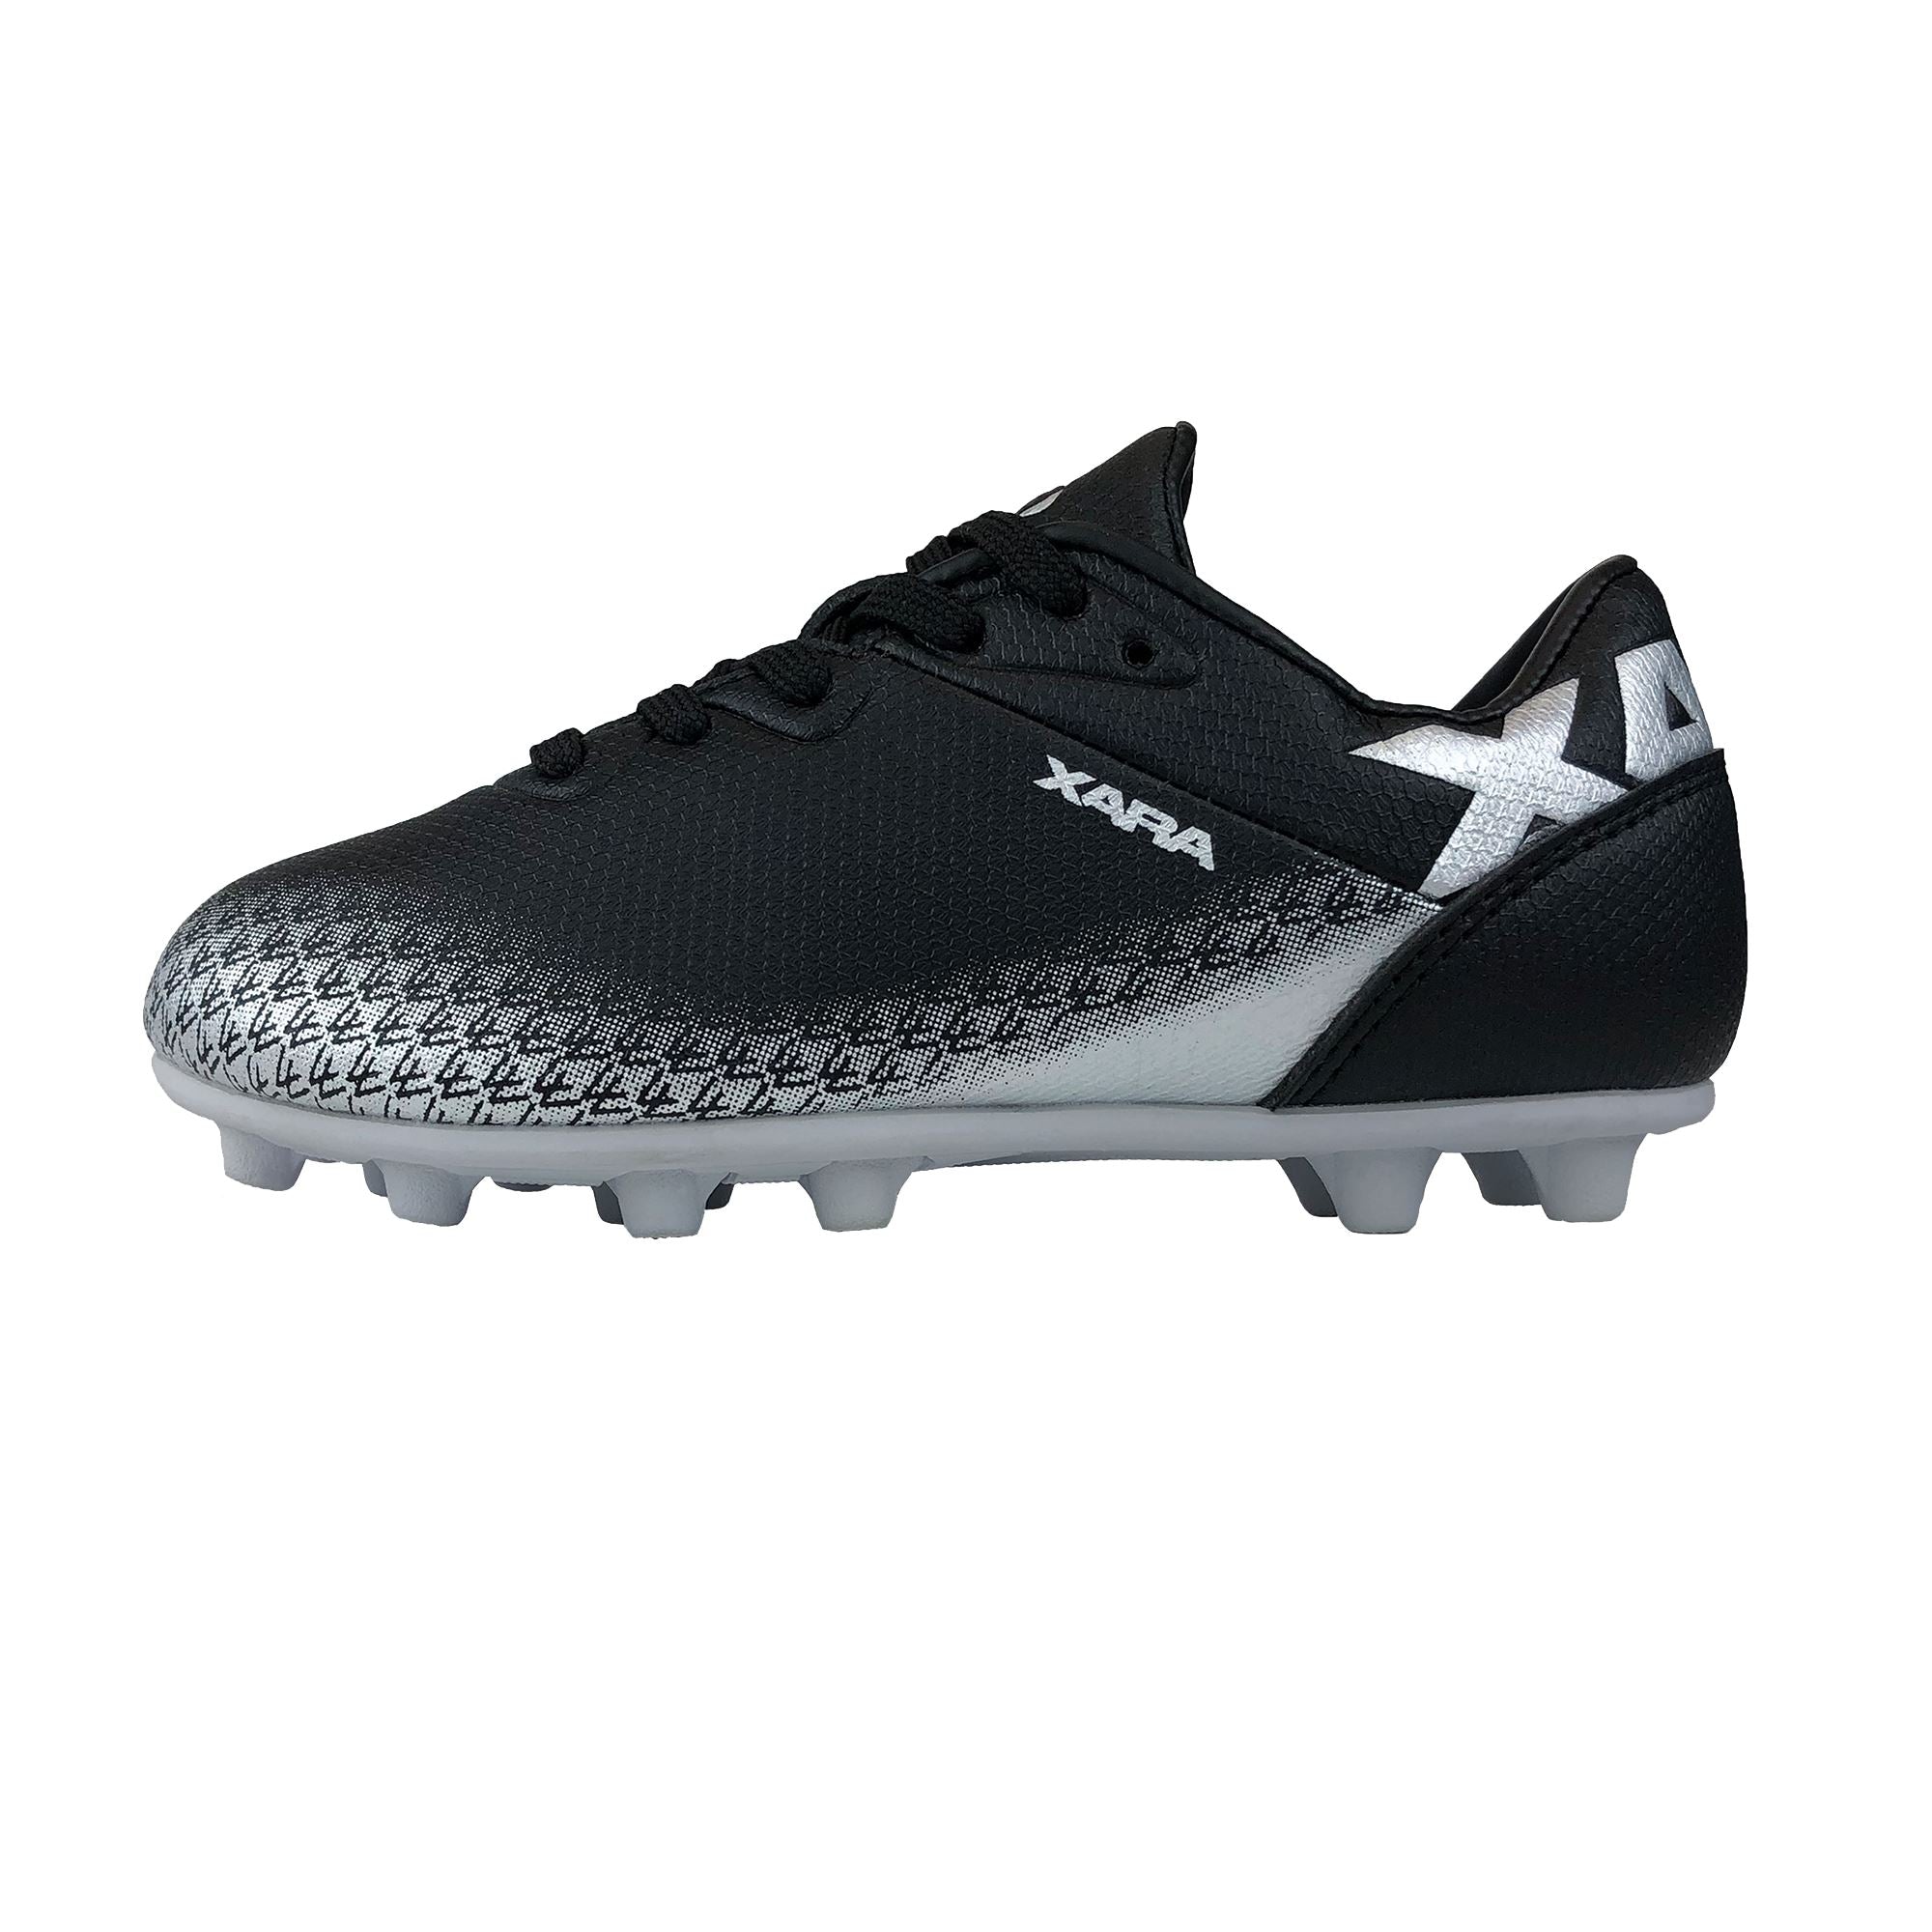 Matrix Studded Shoe - Child & Youth Shoes Xara Soccer Black/Silver Child Size 8 